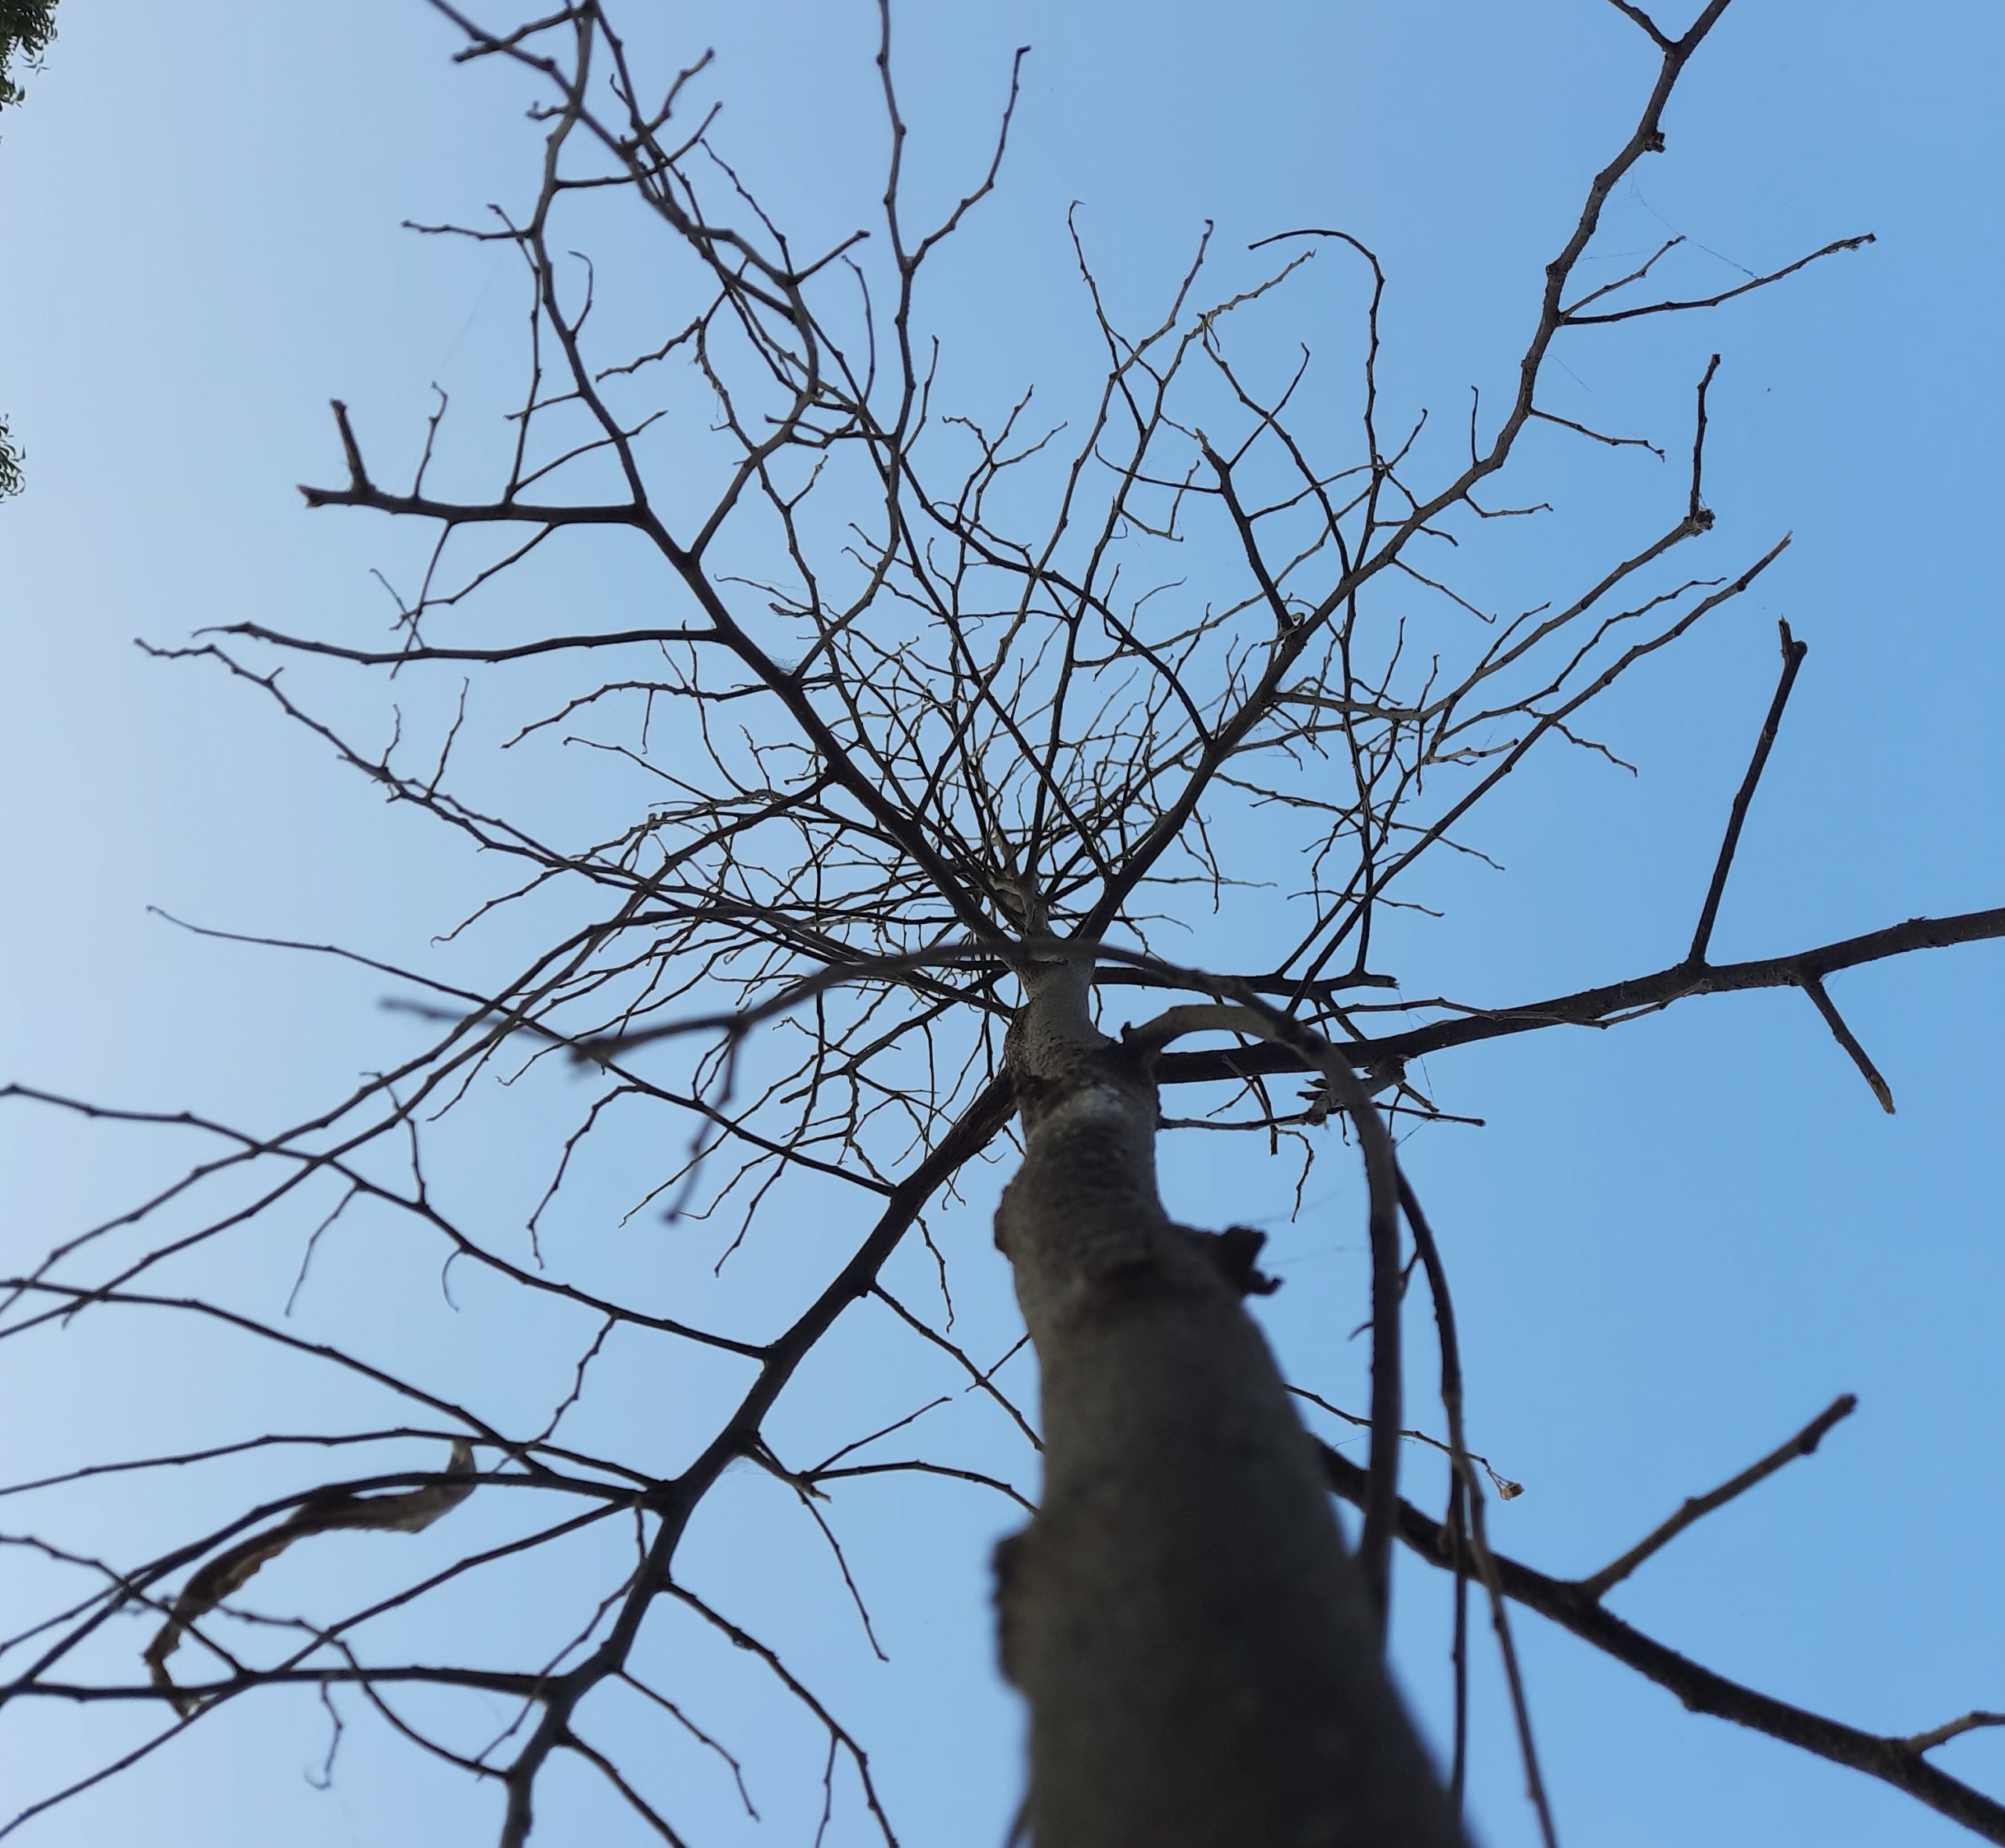 A dry tree